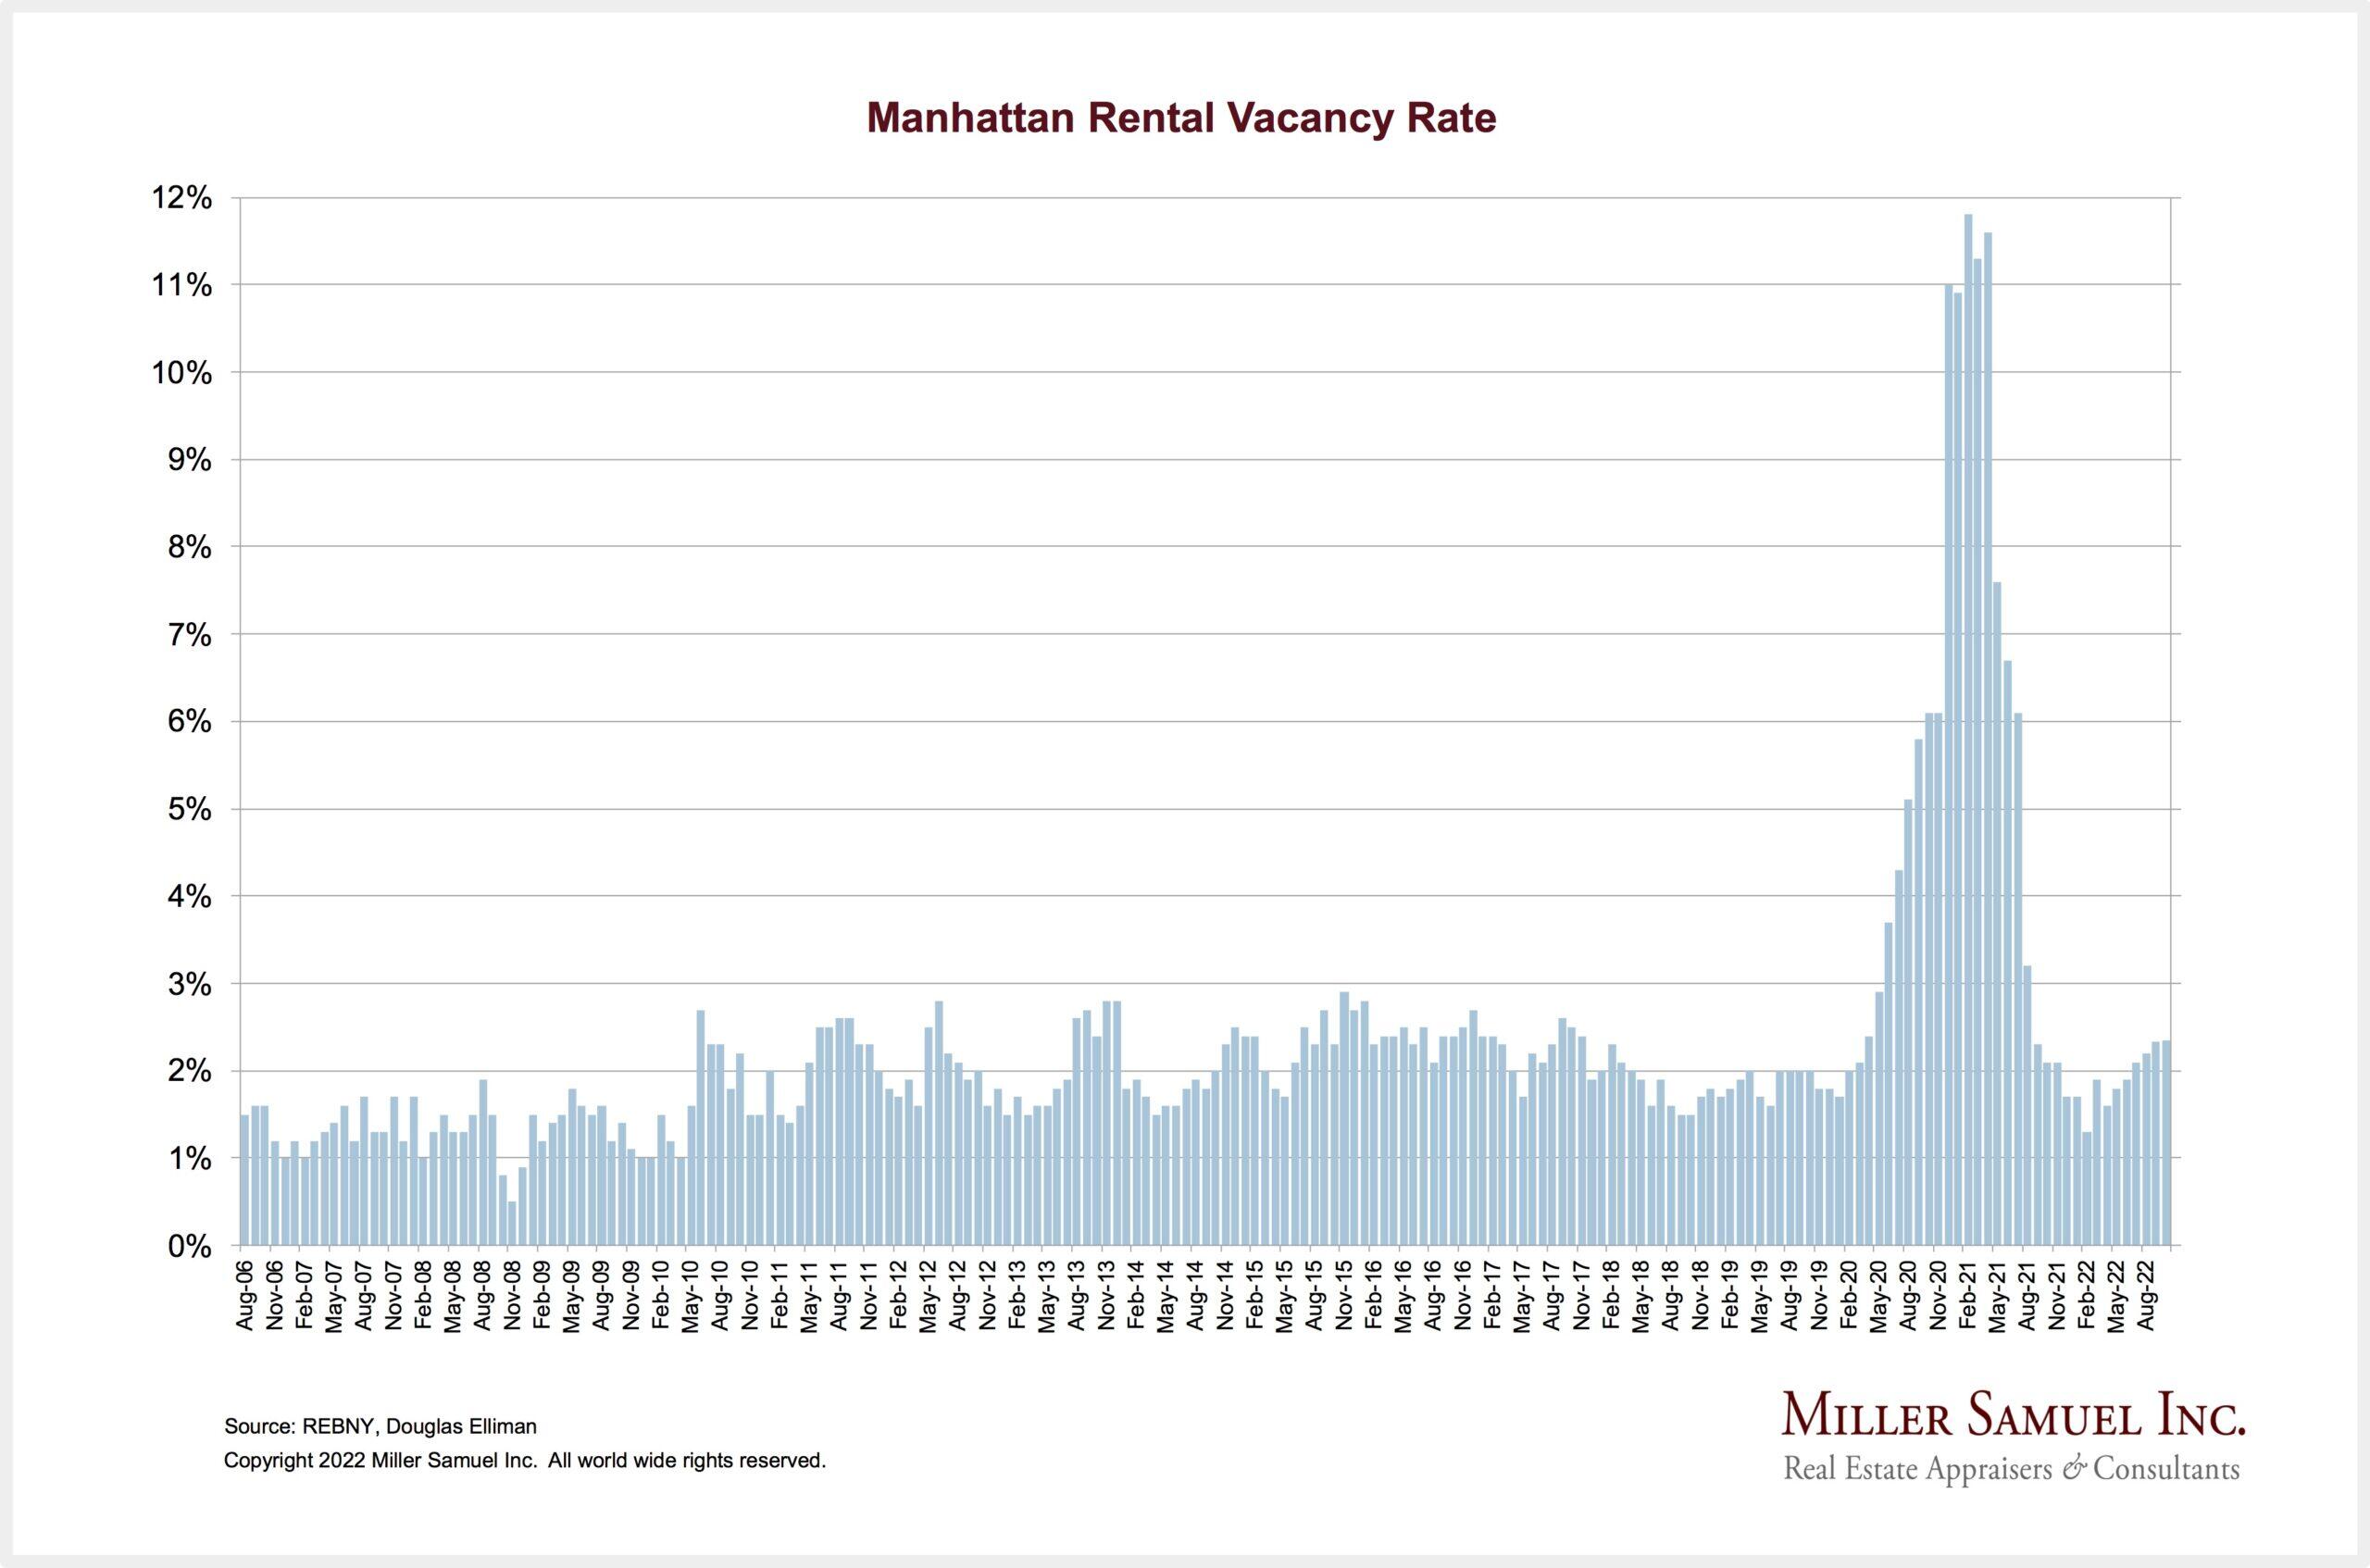 Manhattan Rental Vacancy Rate [Sources: Miller Samuel, REBNY, Douglas Elliman]